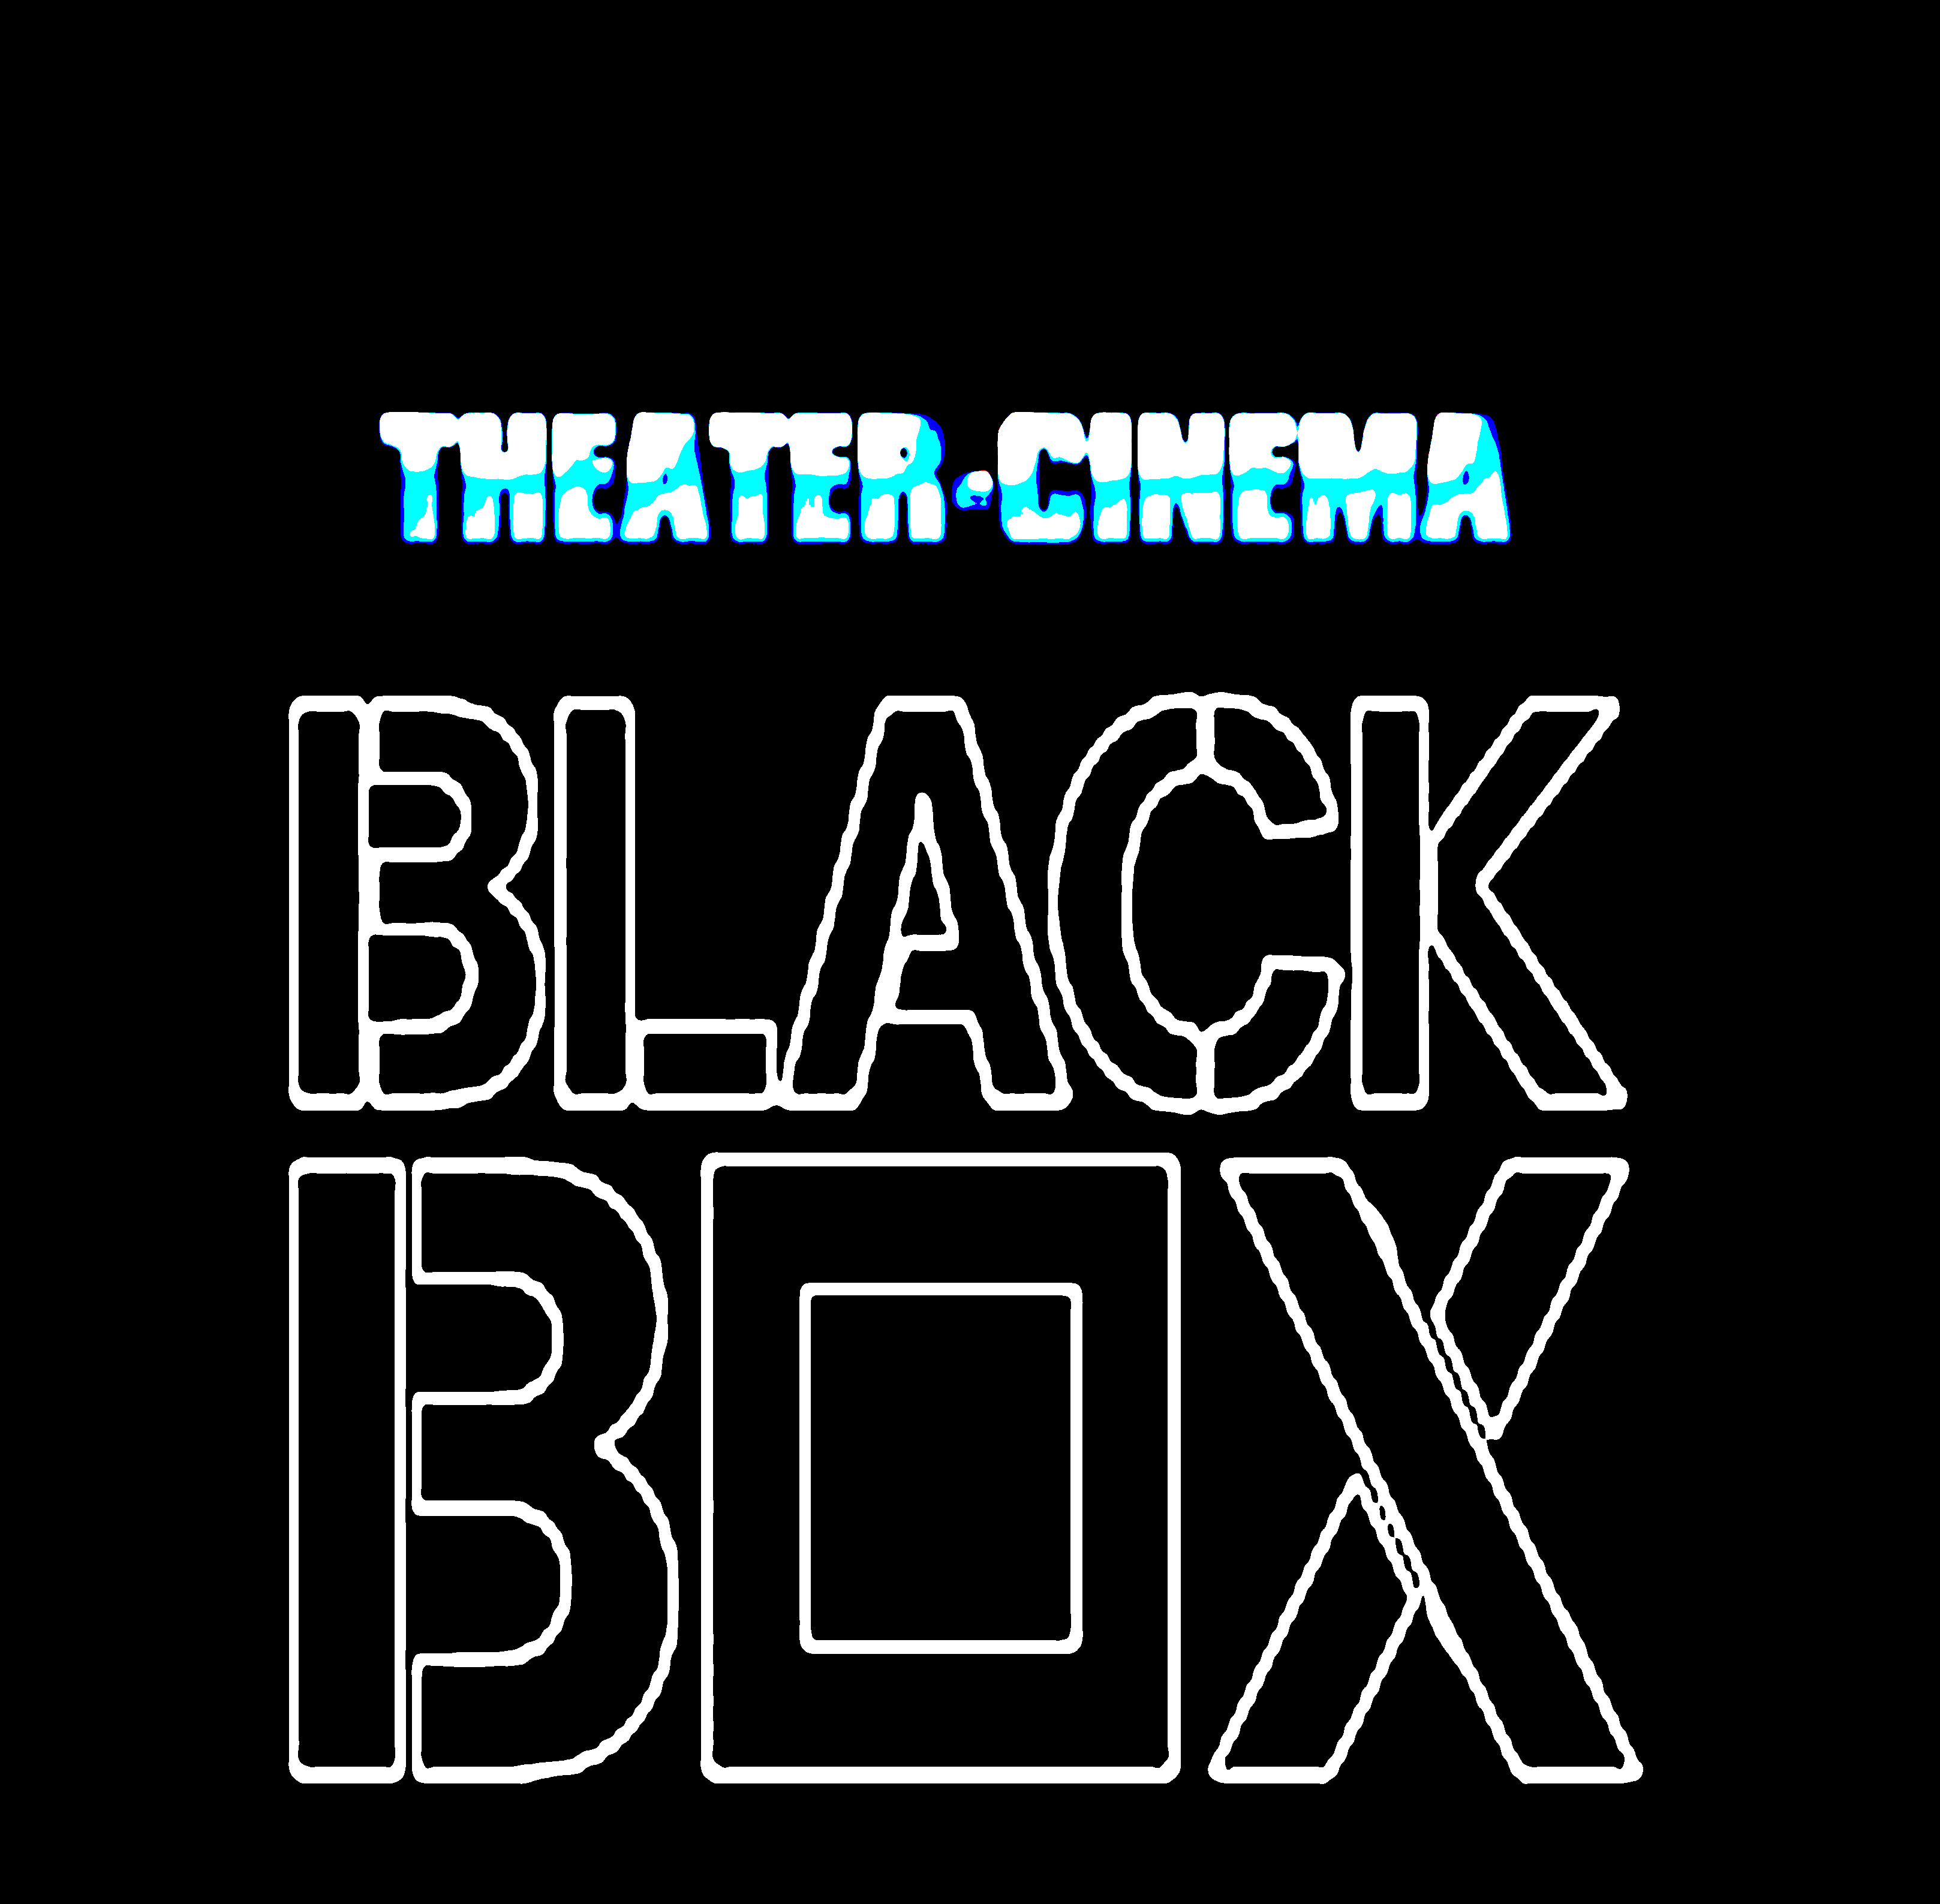 blackbox theater cinema 